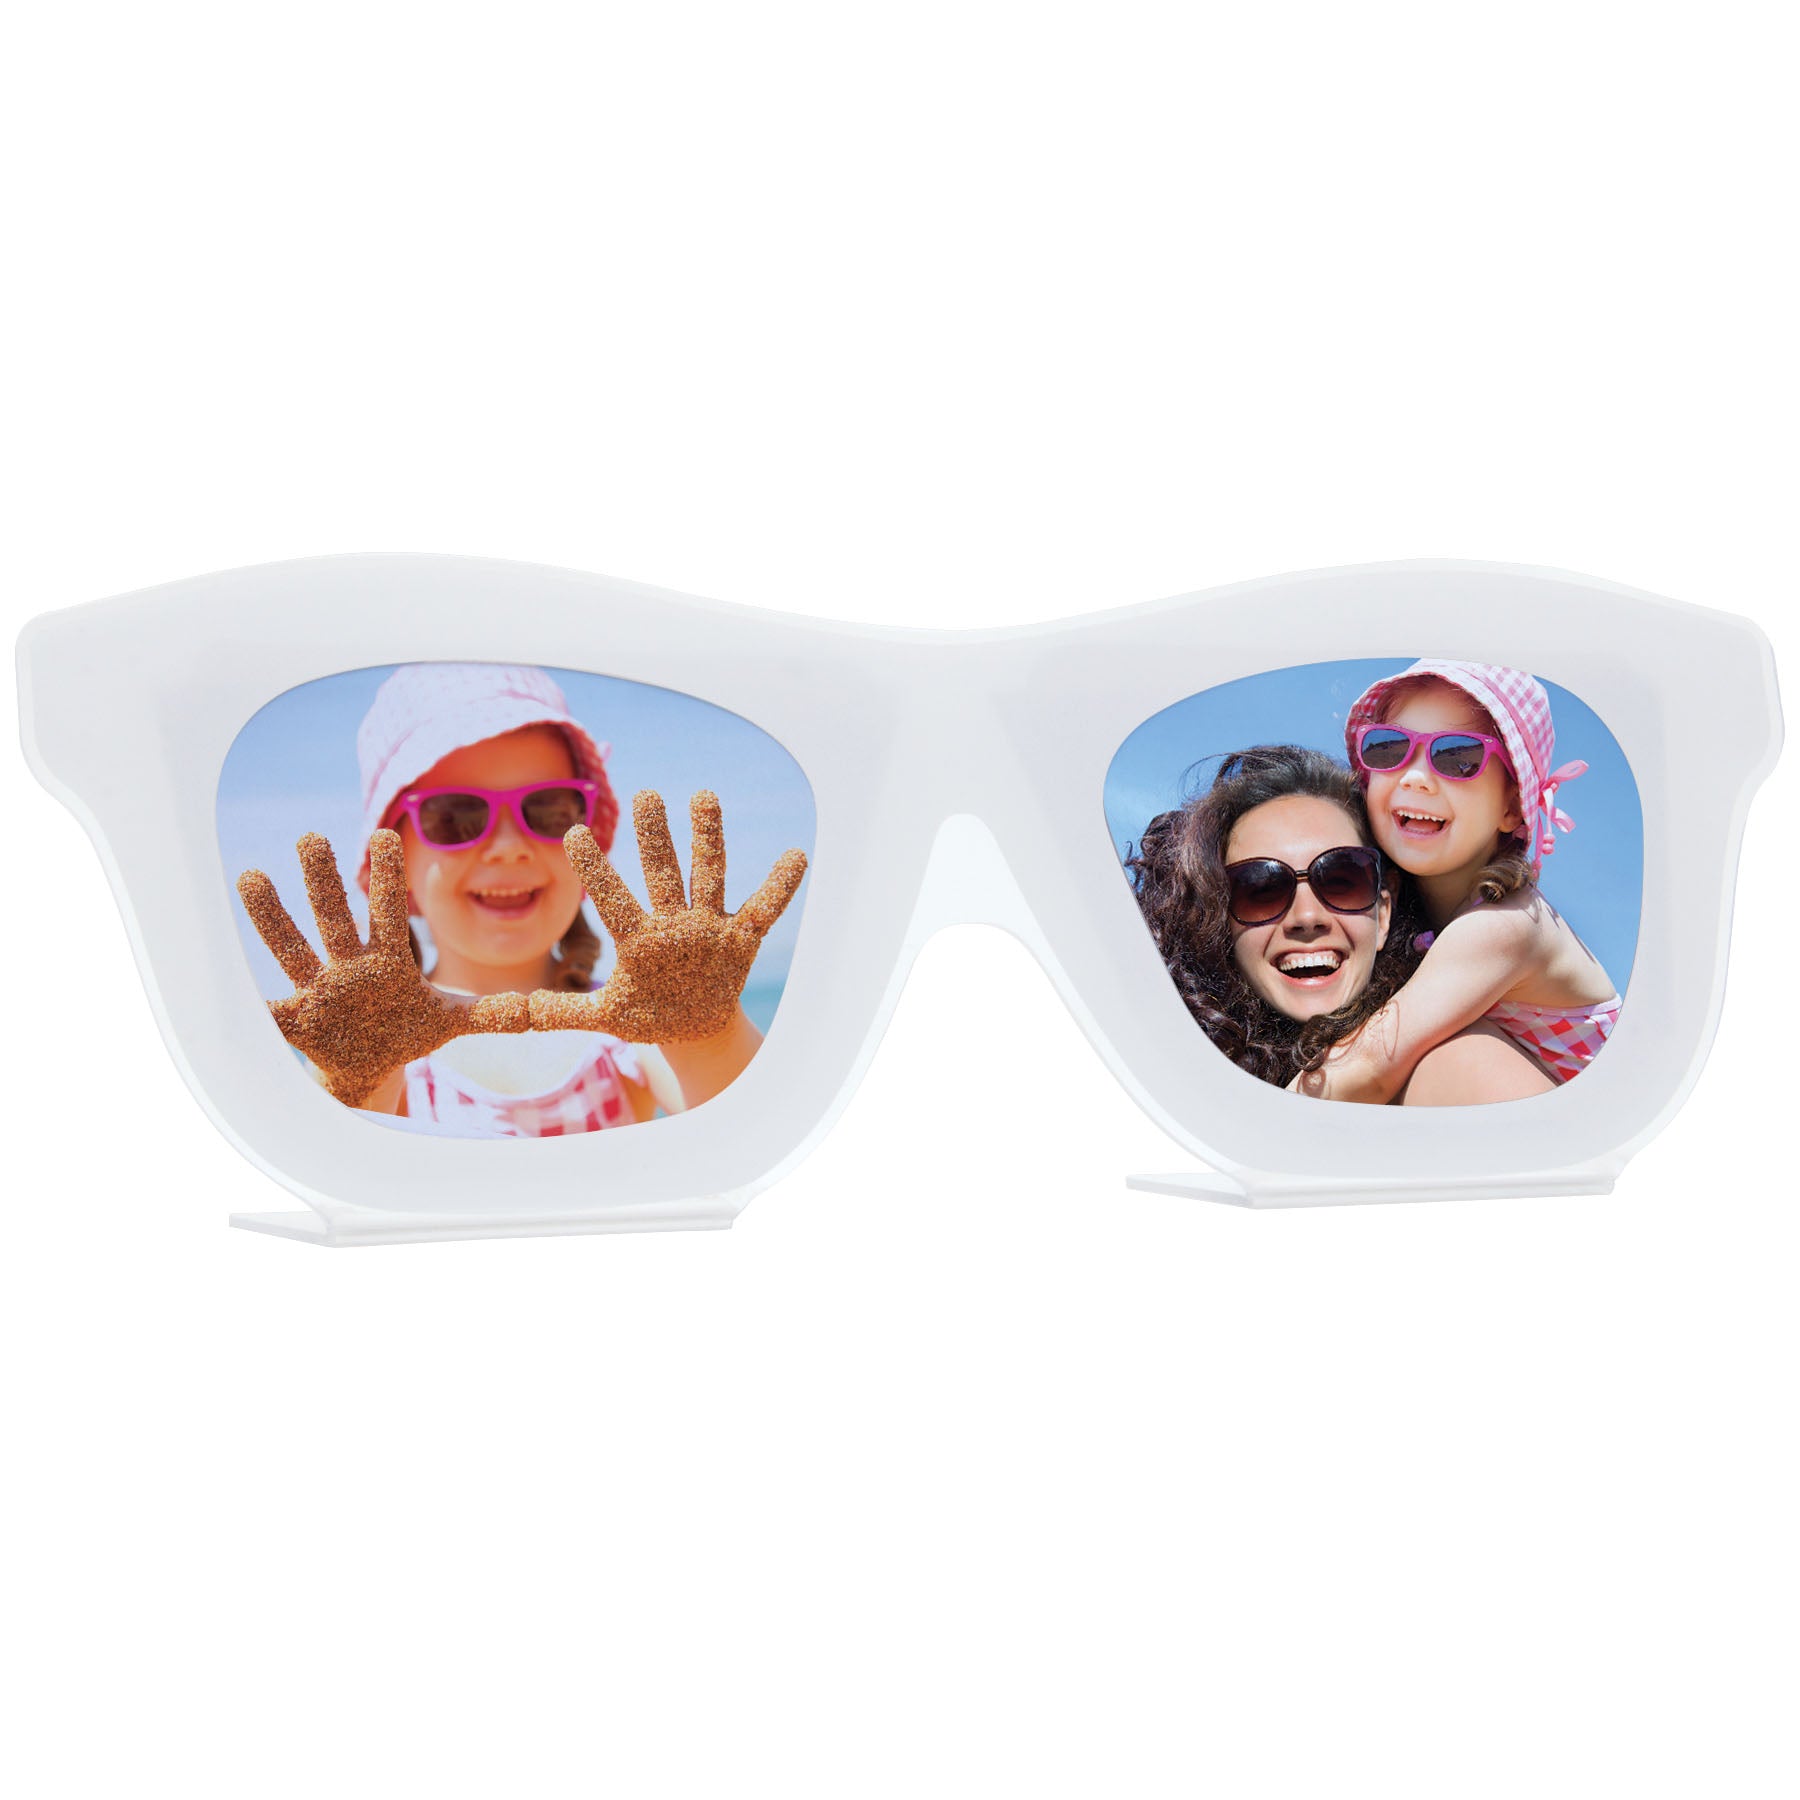 Sunglasses Picture Frames